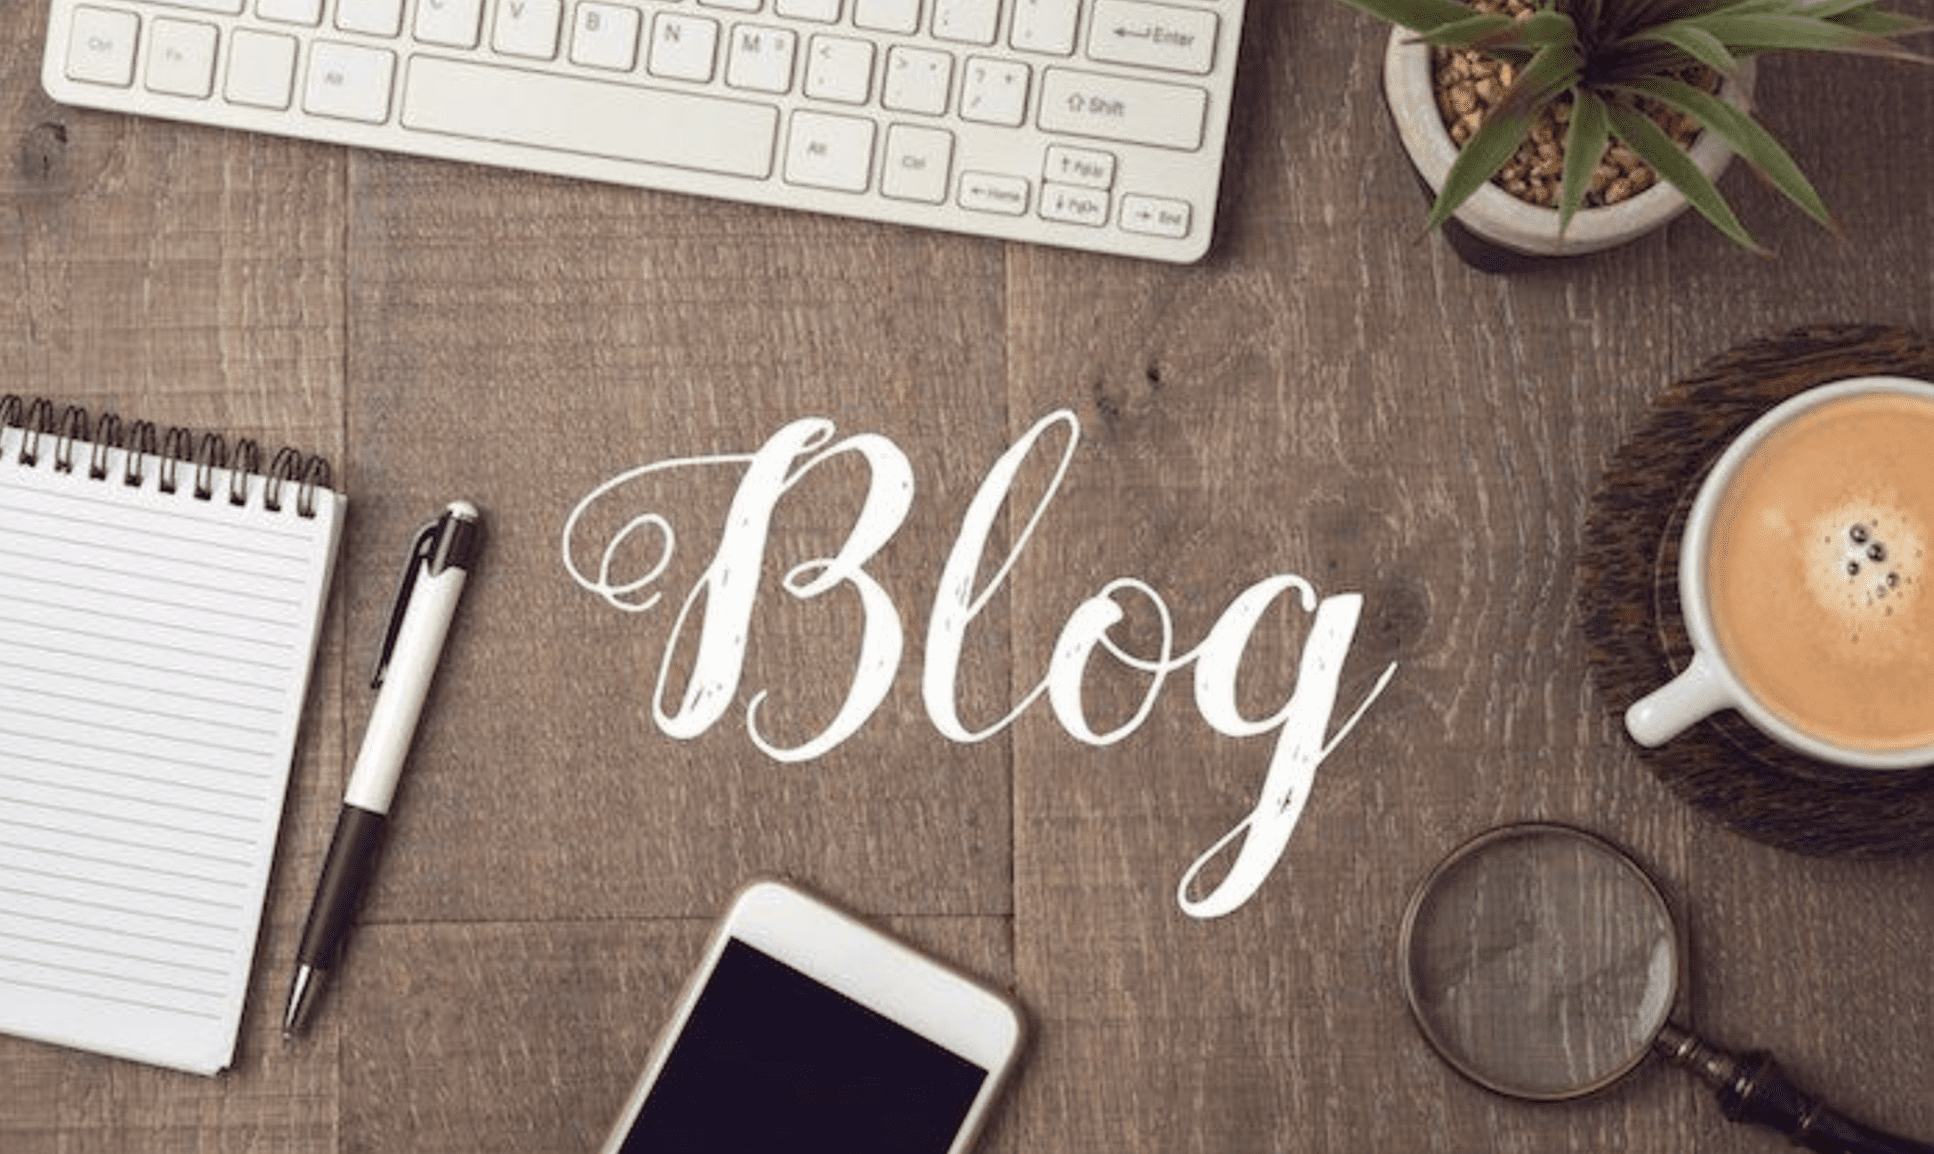 La importancia de tener un Blog